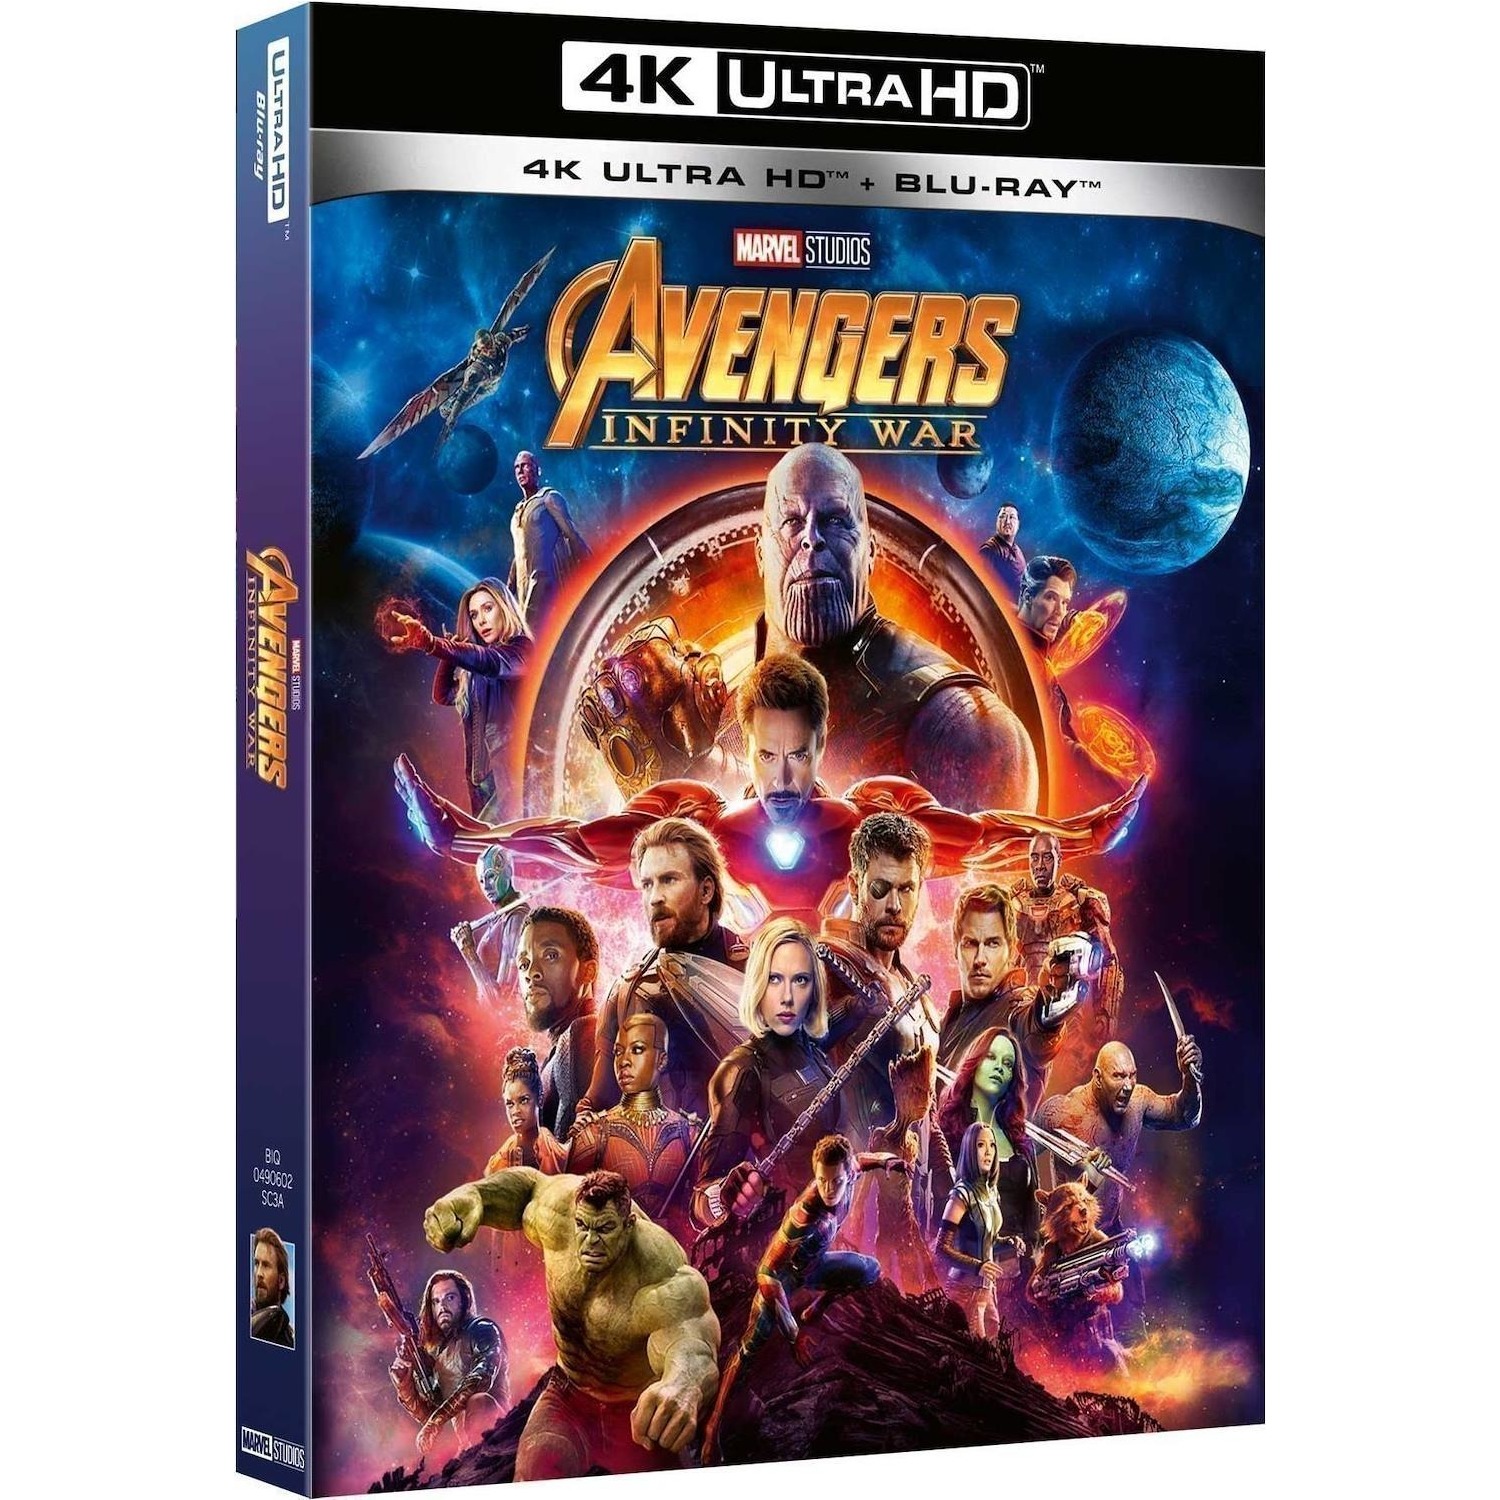 Immagine per Blu-ray 4K The Avengers Infinity War da DIMOStore